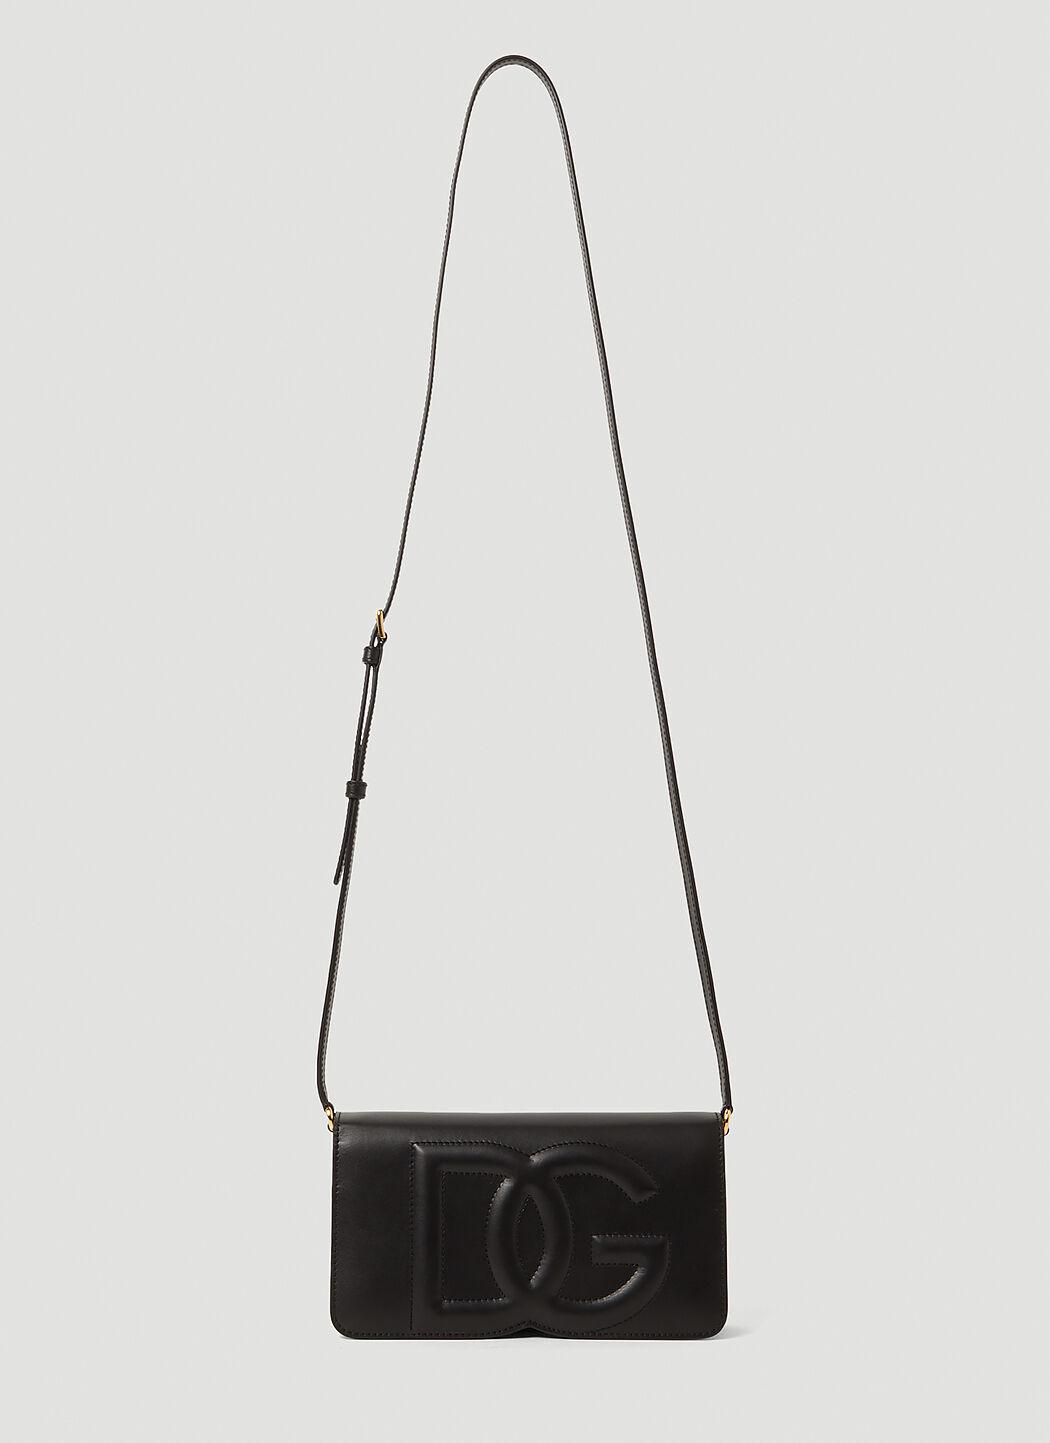 Gucci Logo Leather Phone Bag Black guc0257139